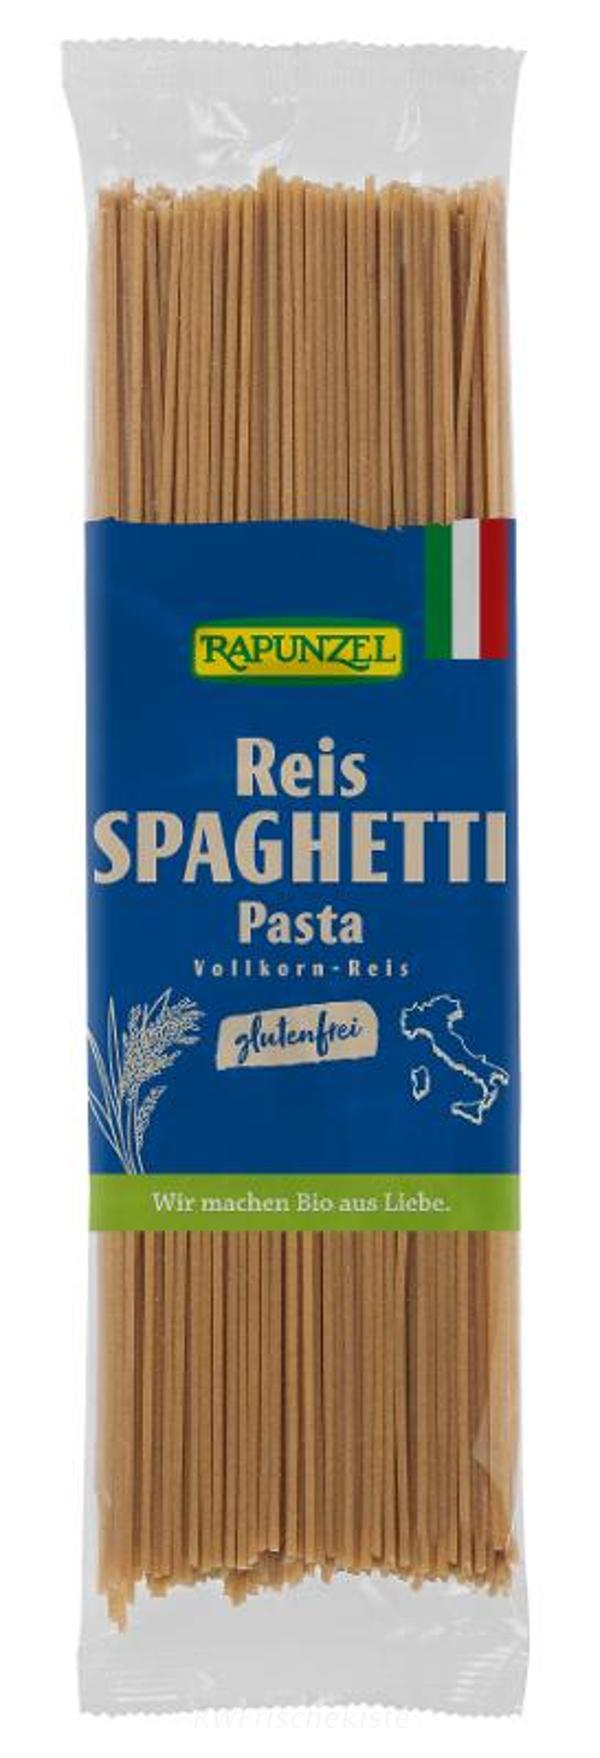 Produktfoto zu Reis-Spaghetti